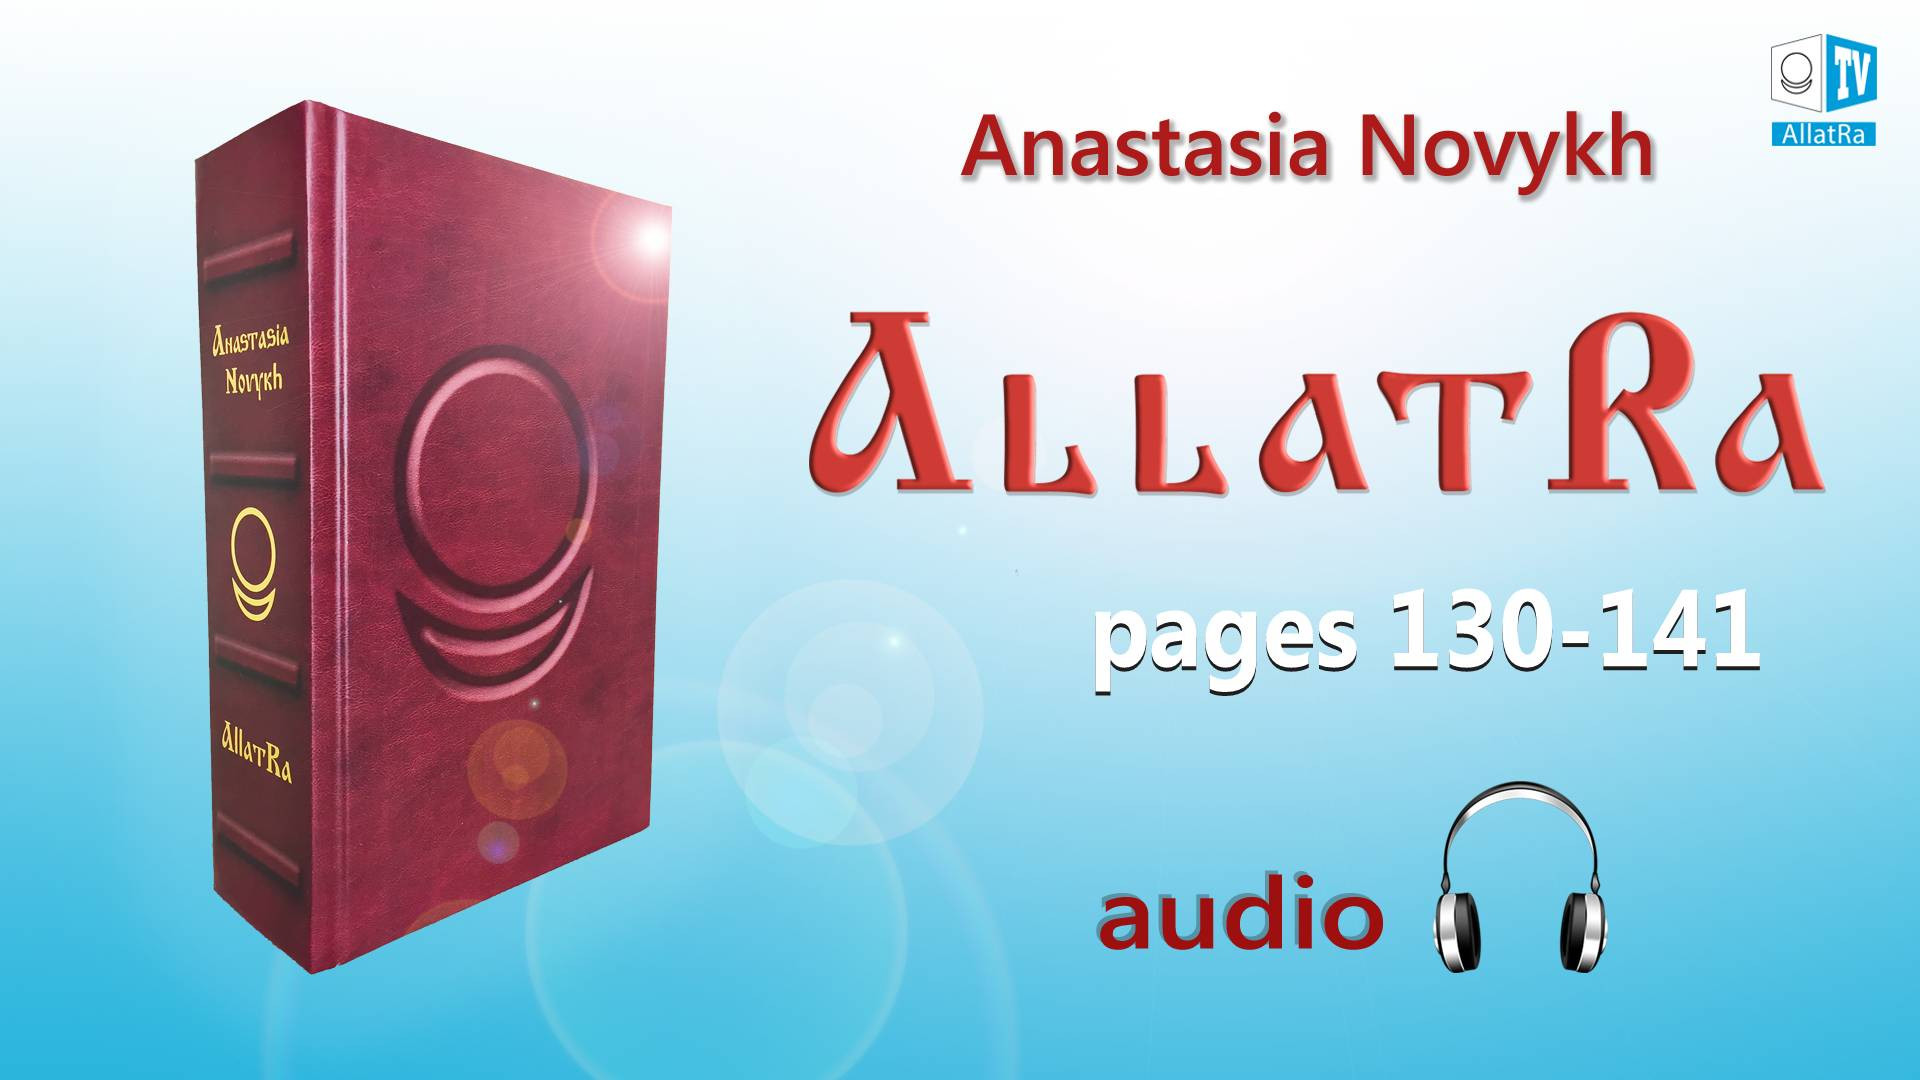 АllatRa. Anastasia Novykh. Audiobook. Pages 130-141